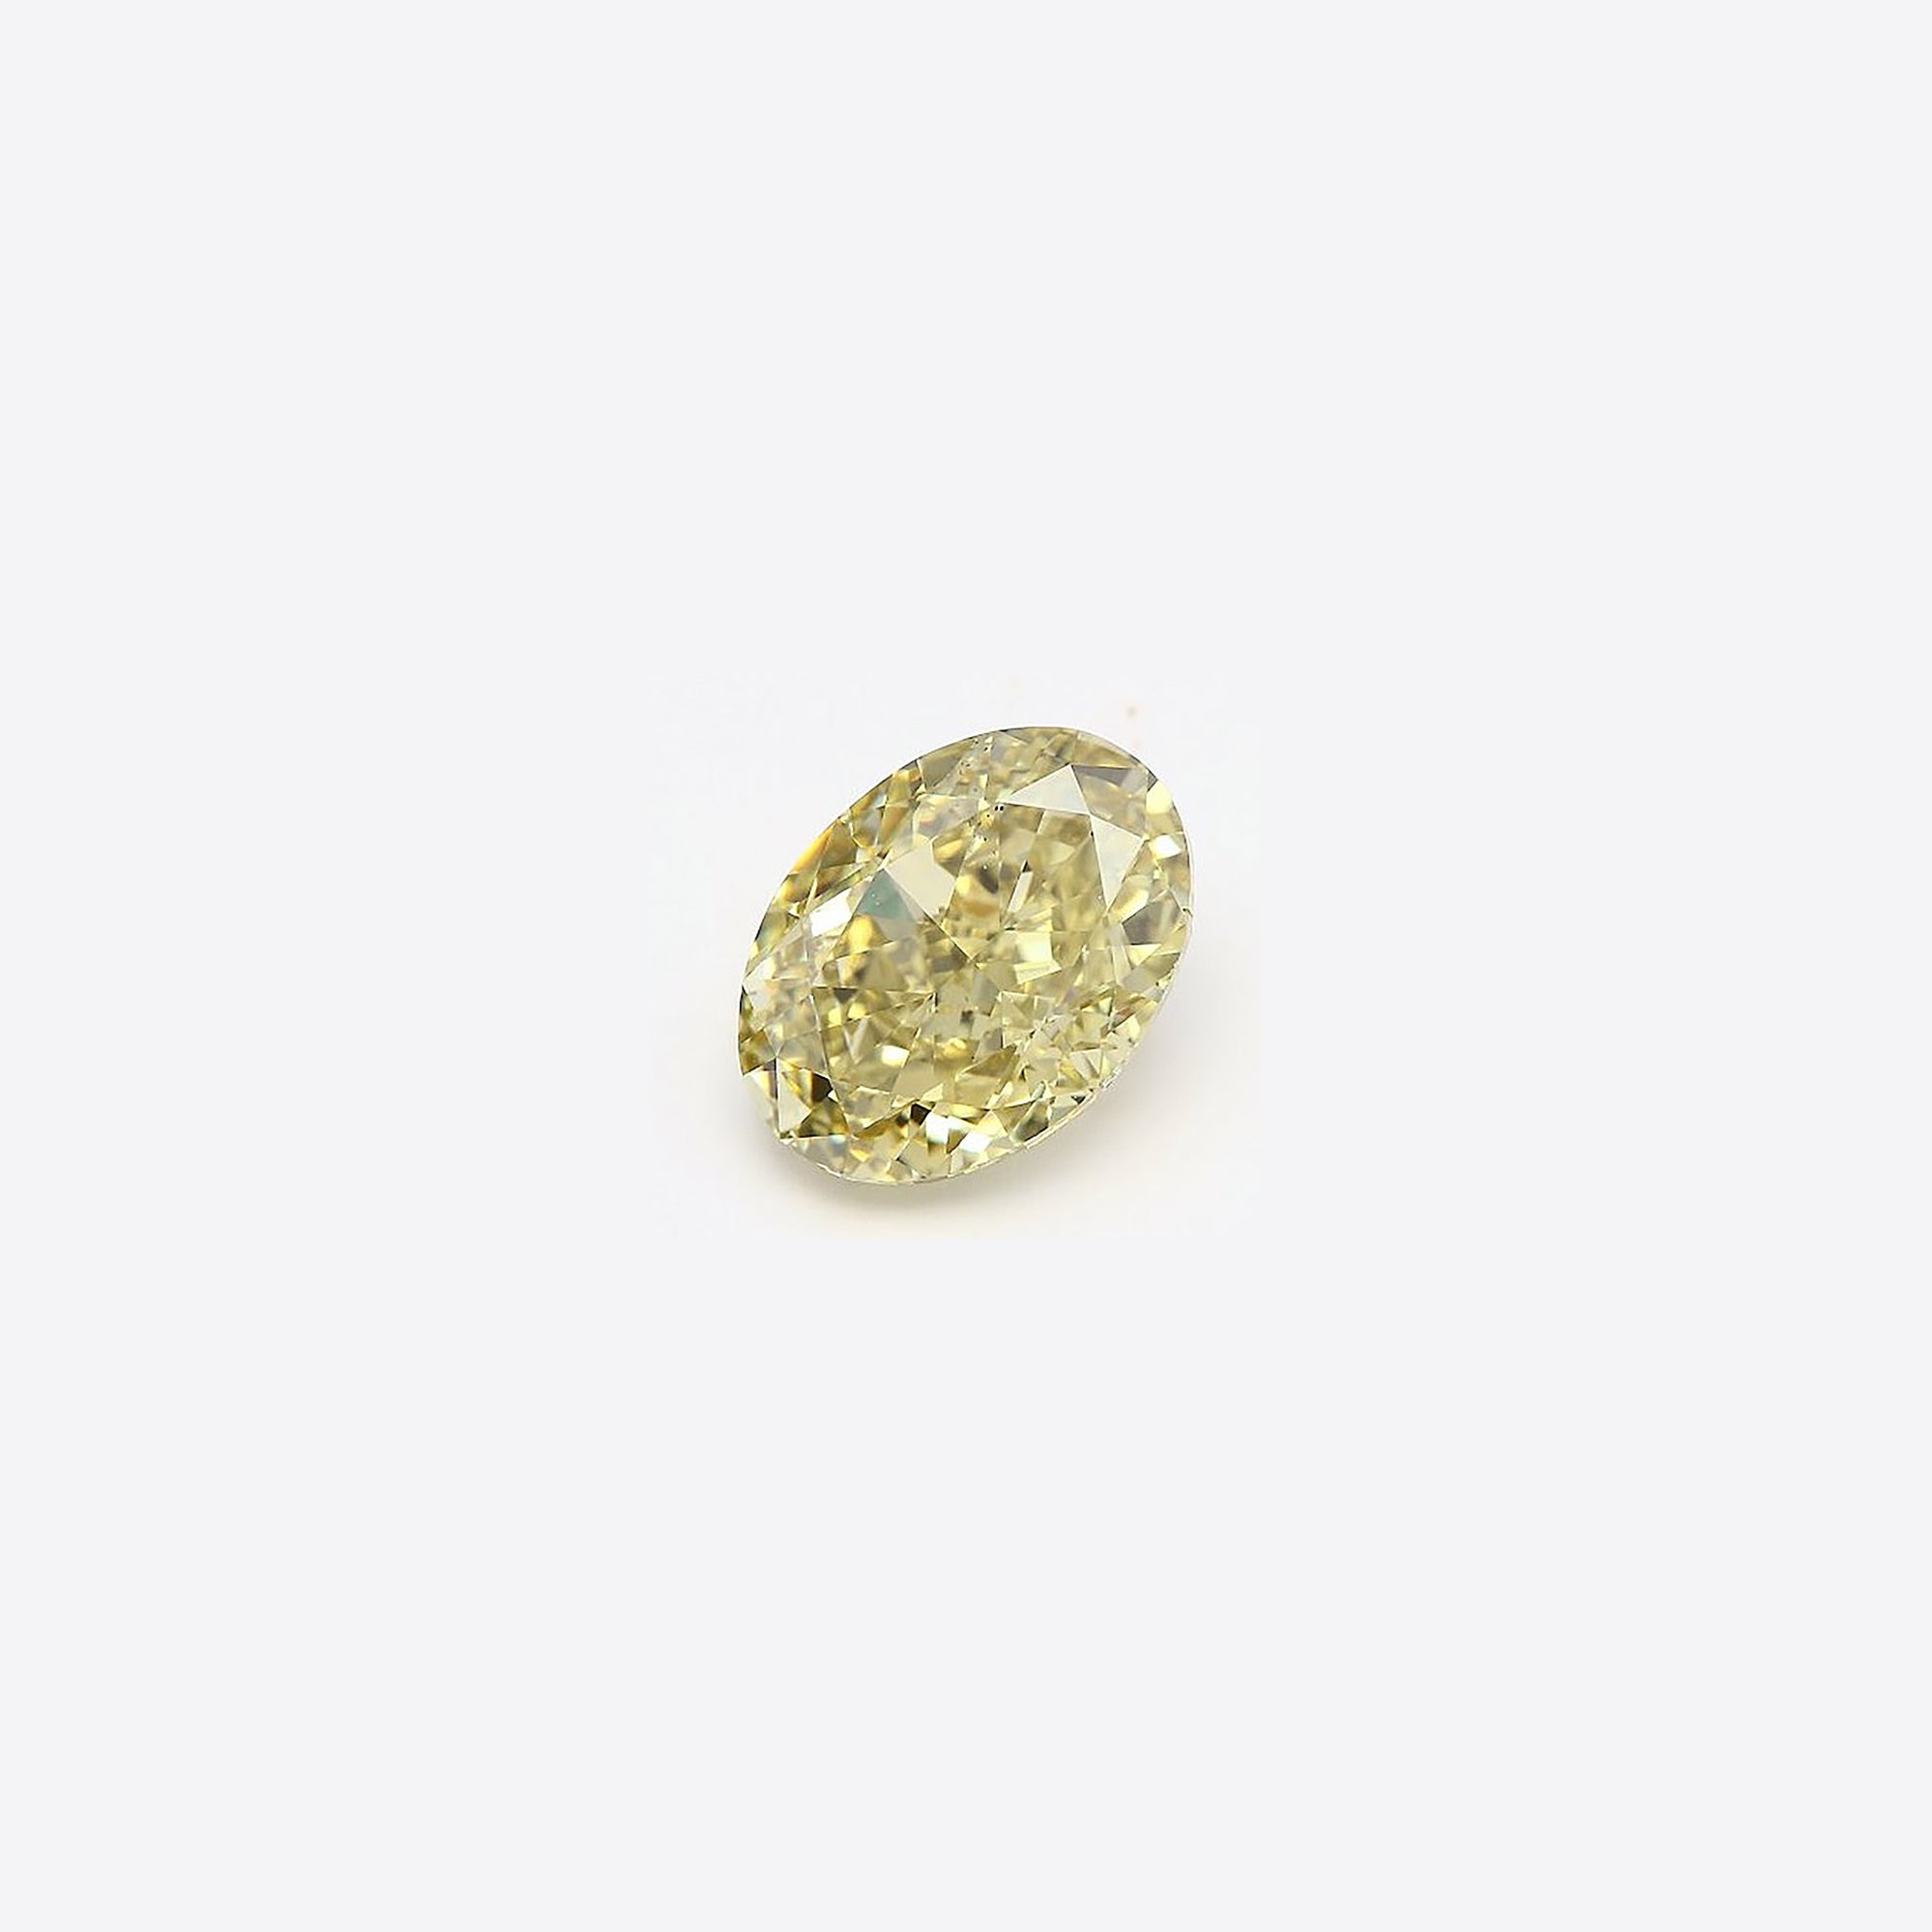 Natural Fancy Deep Brownish Greenish Yellow Oval 4.35CT Diamond GIA Certified M487